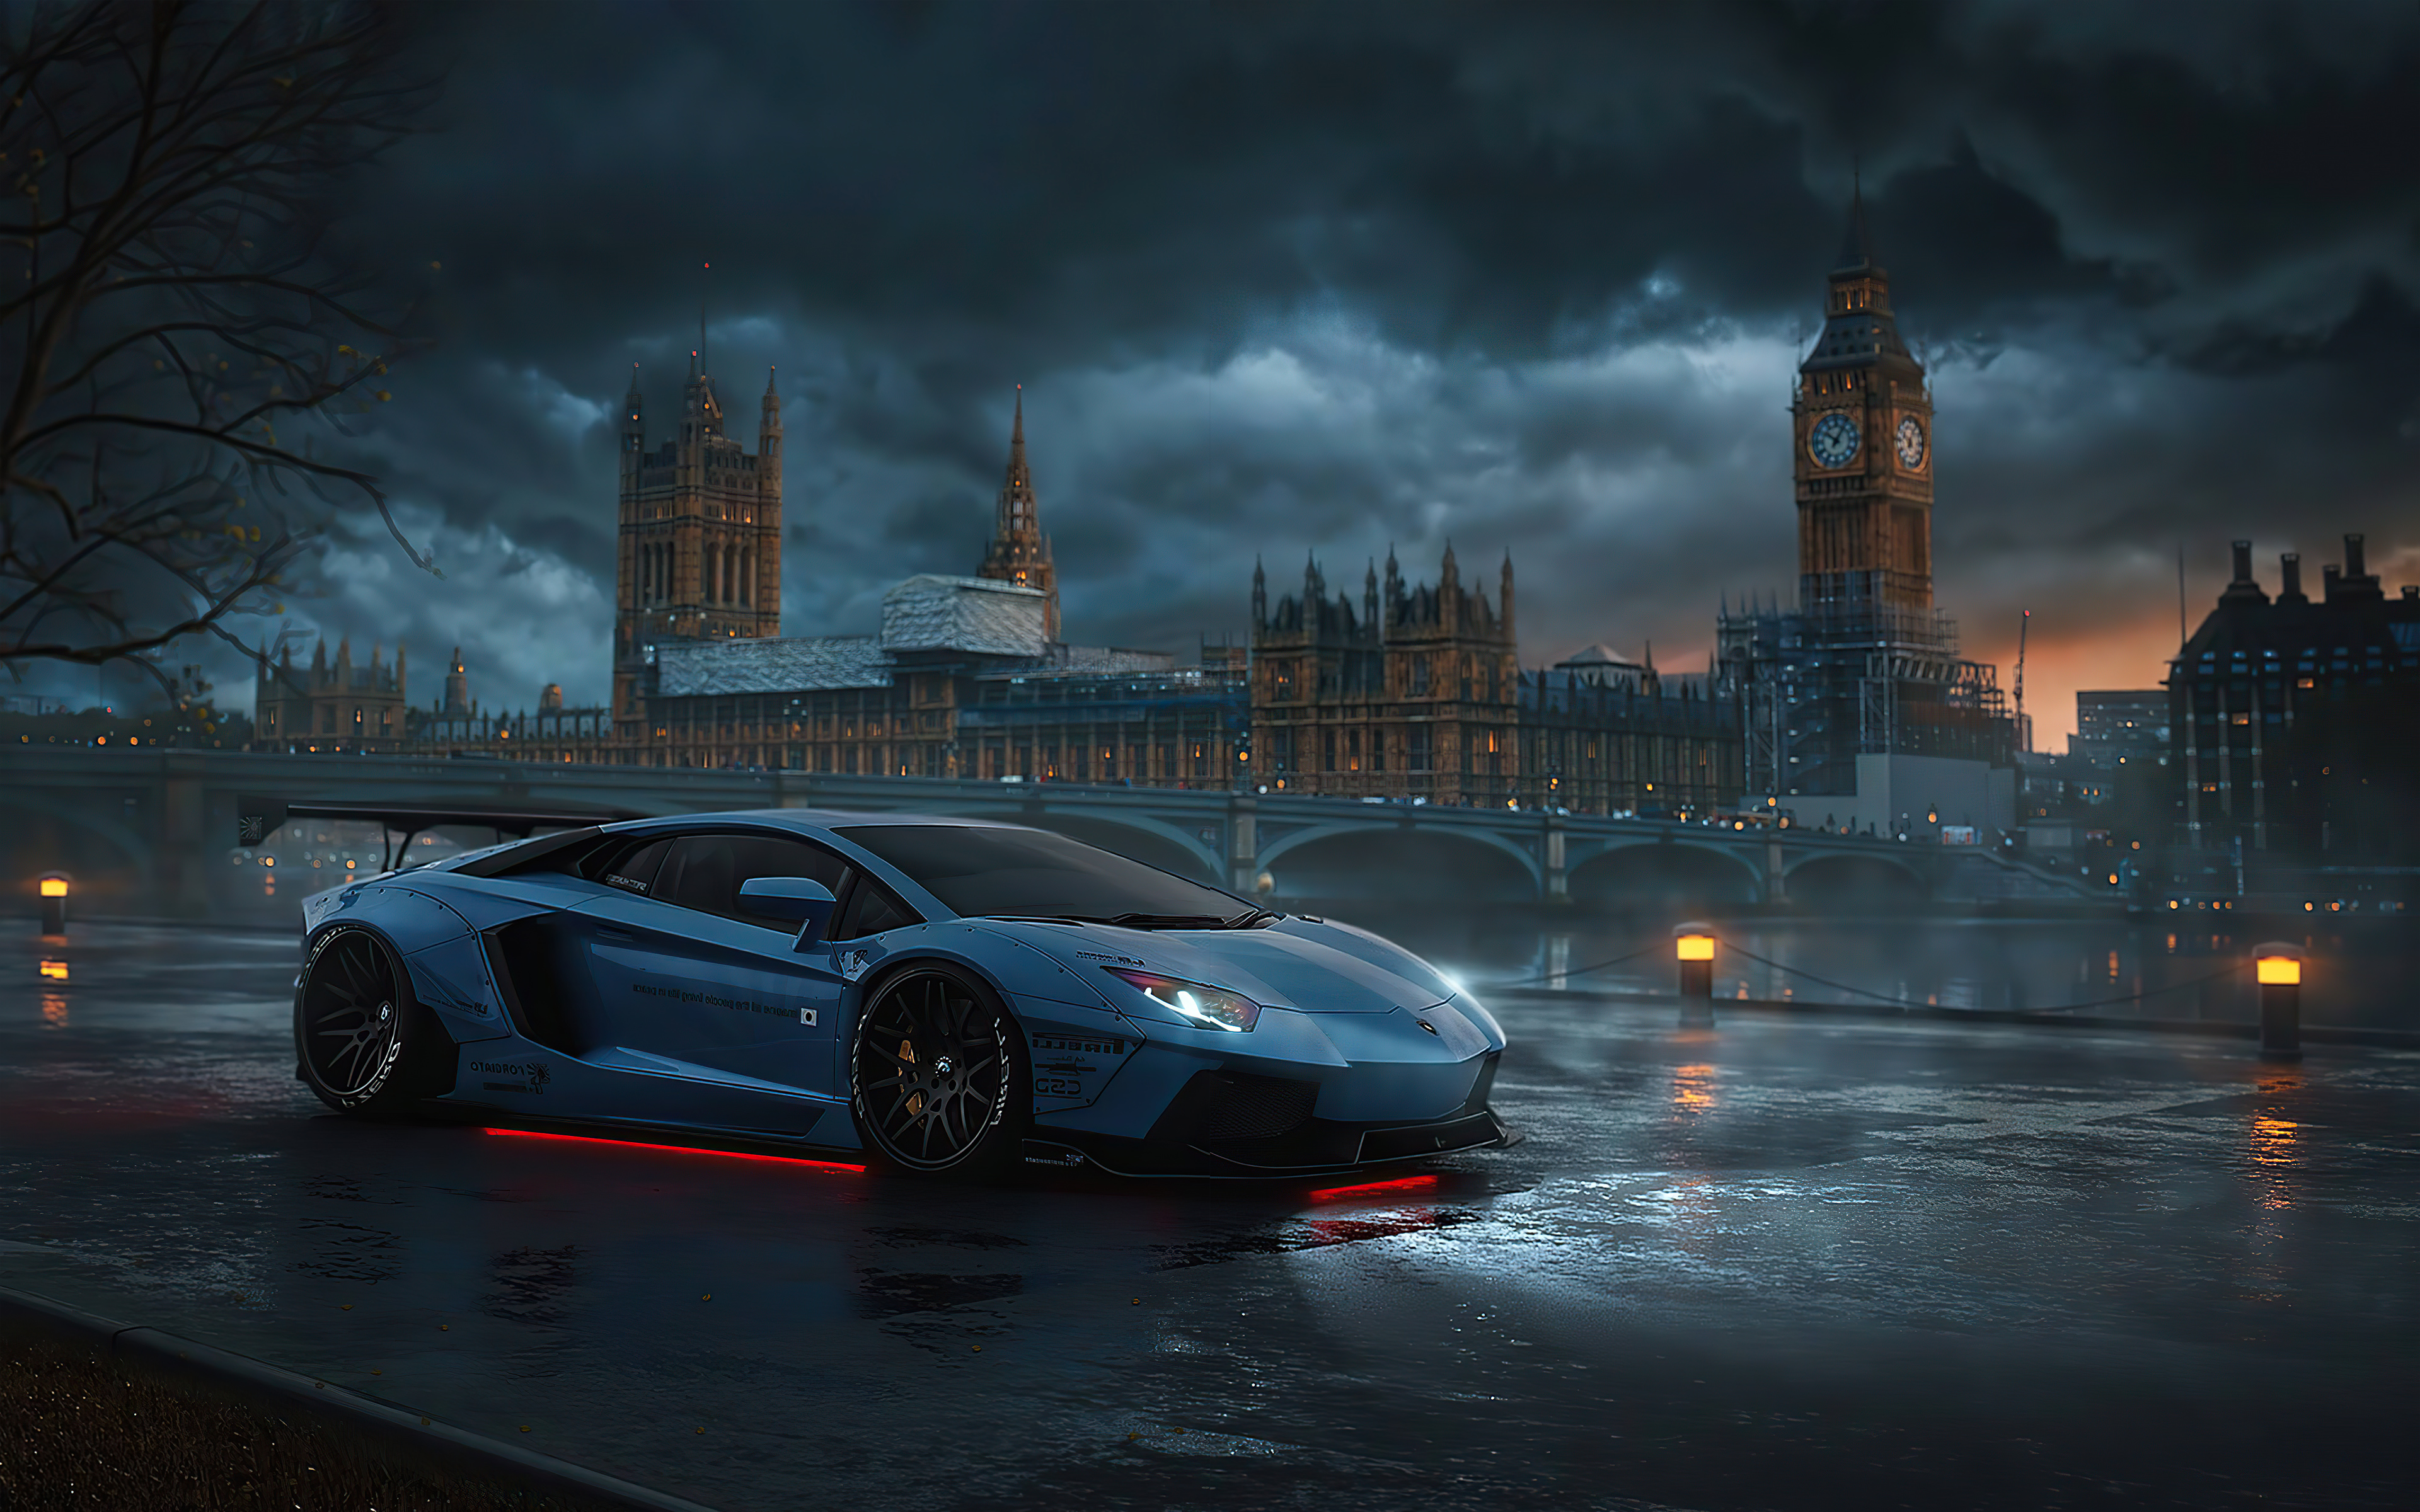 Lamborghini in London Wallpaper 4k Ultra HD ID:7903